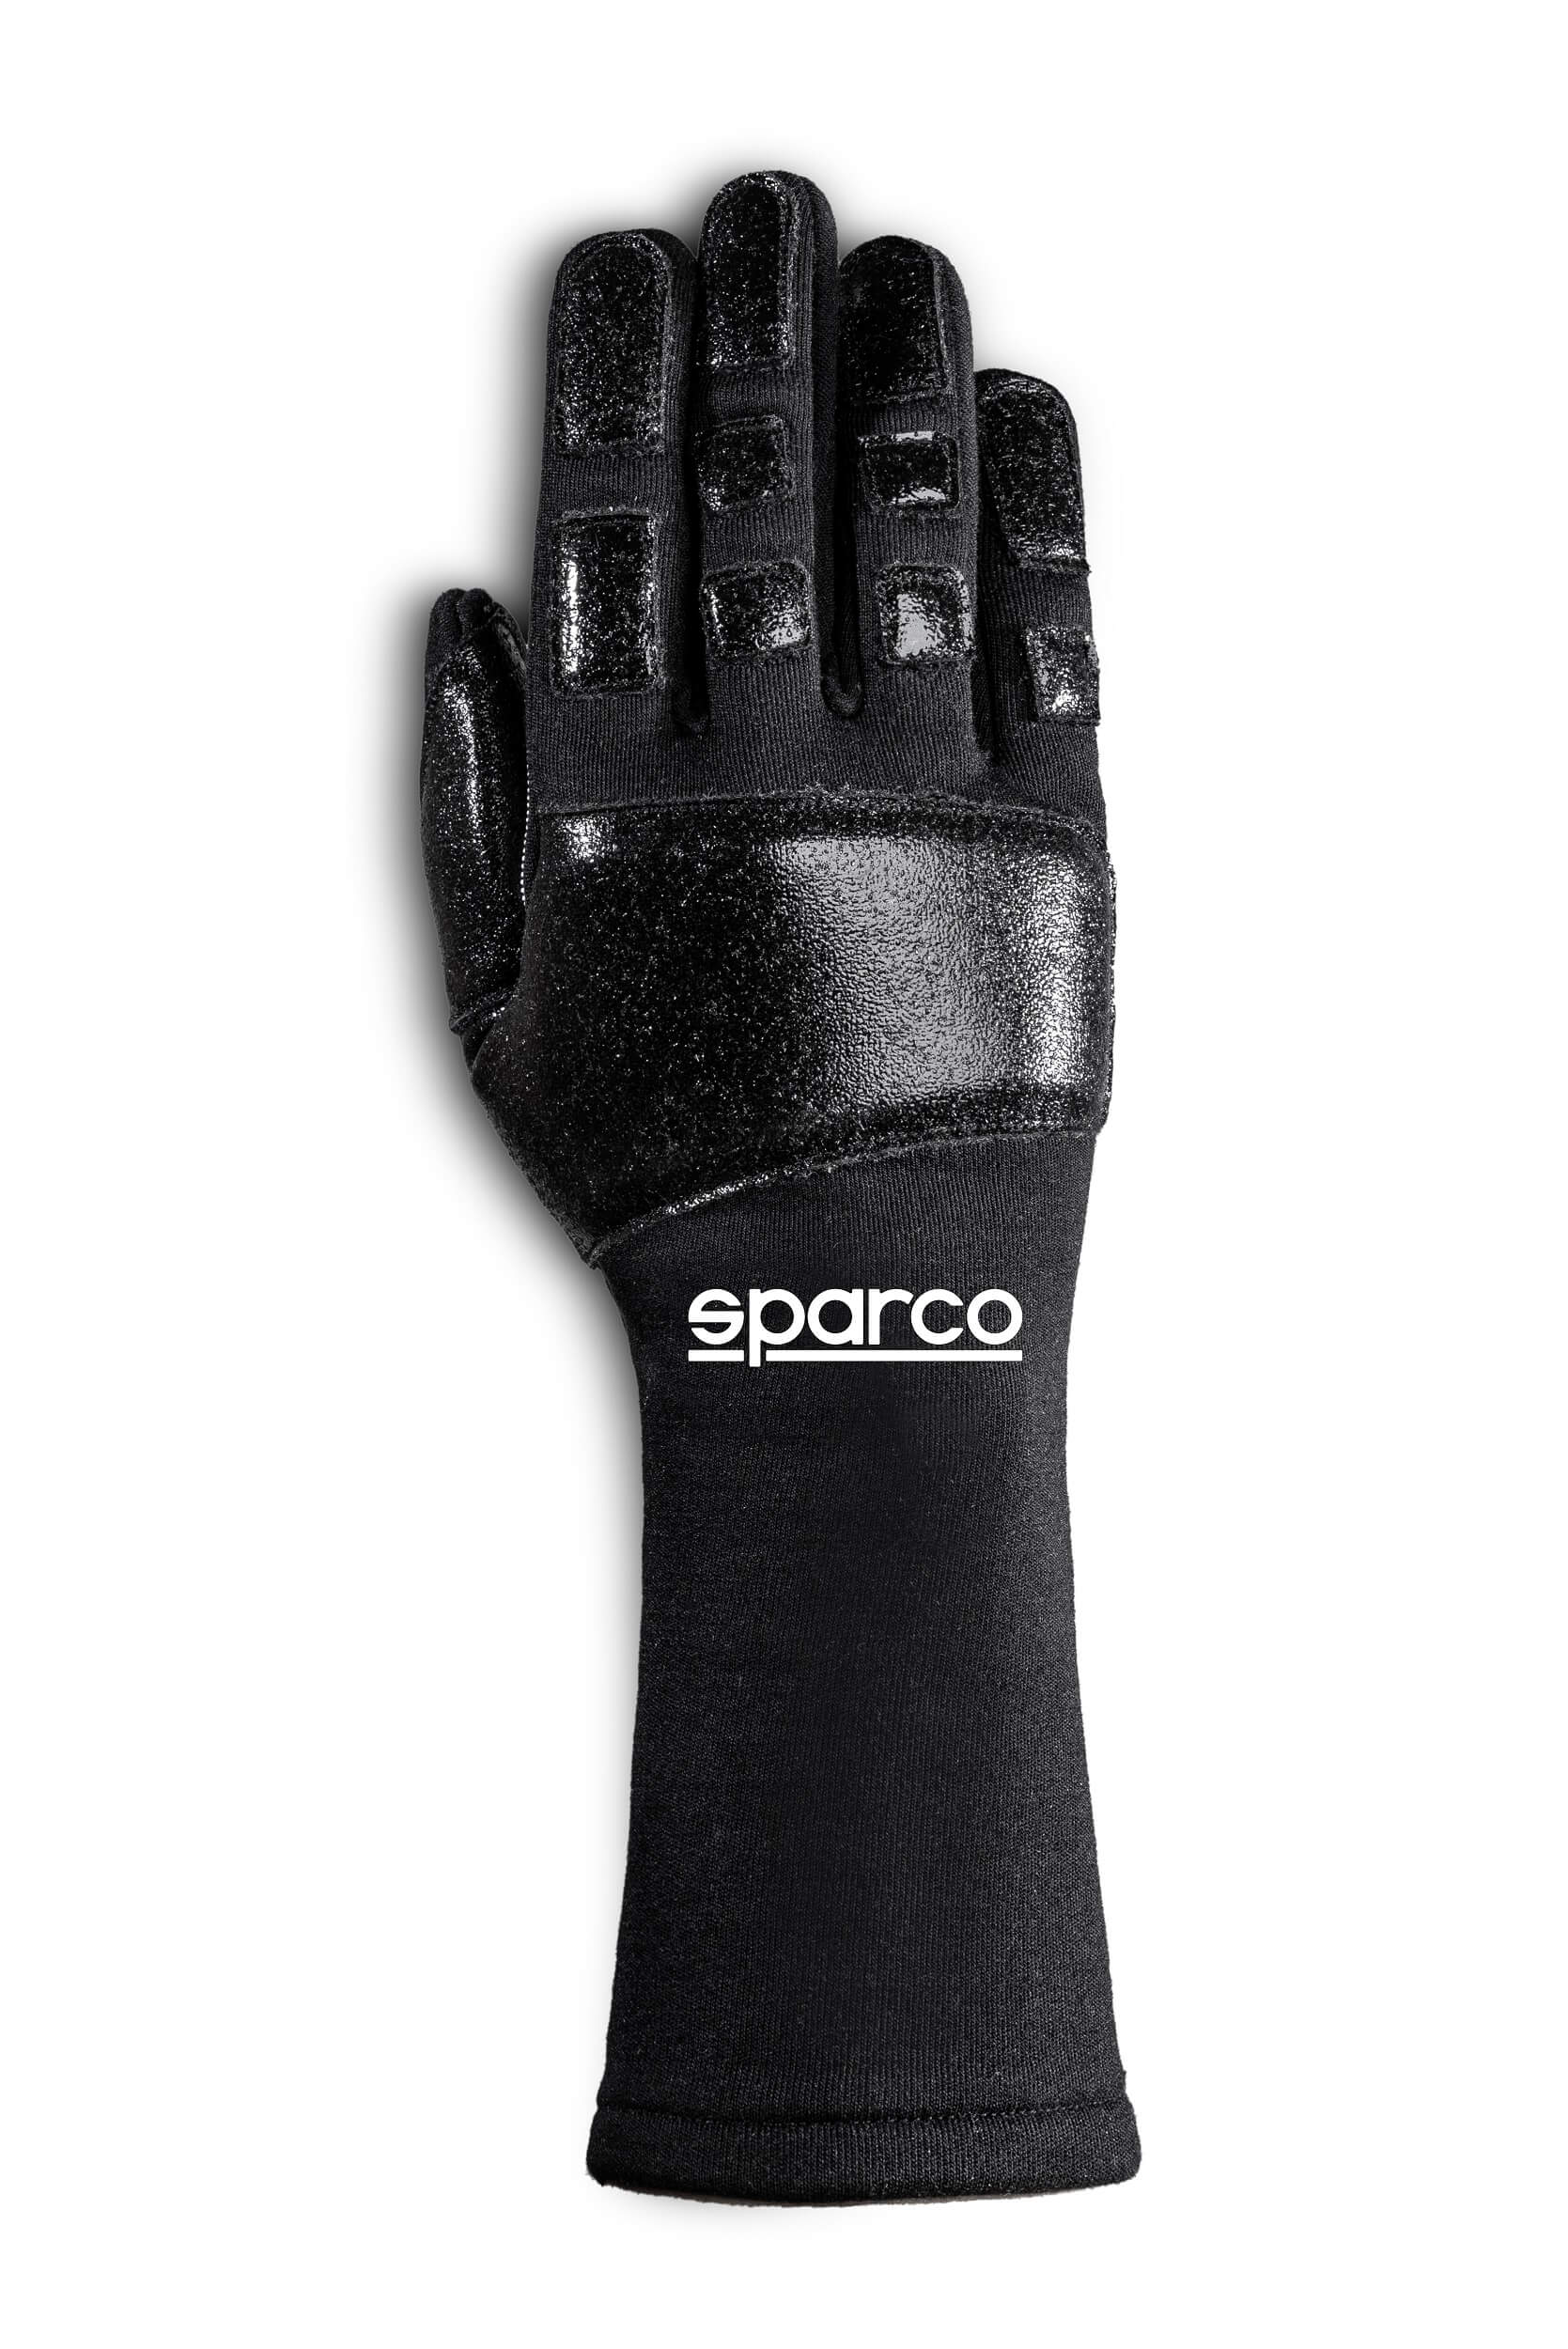 SPARCO 00131808NR TIDE MECA Gloves, NOT FIA, black, size 8 Photo-0 